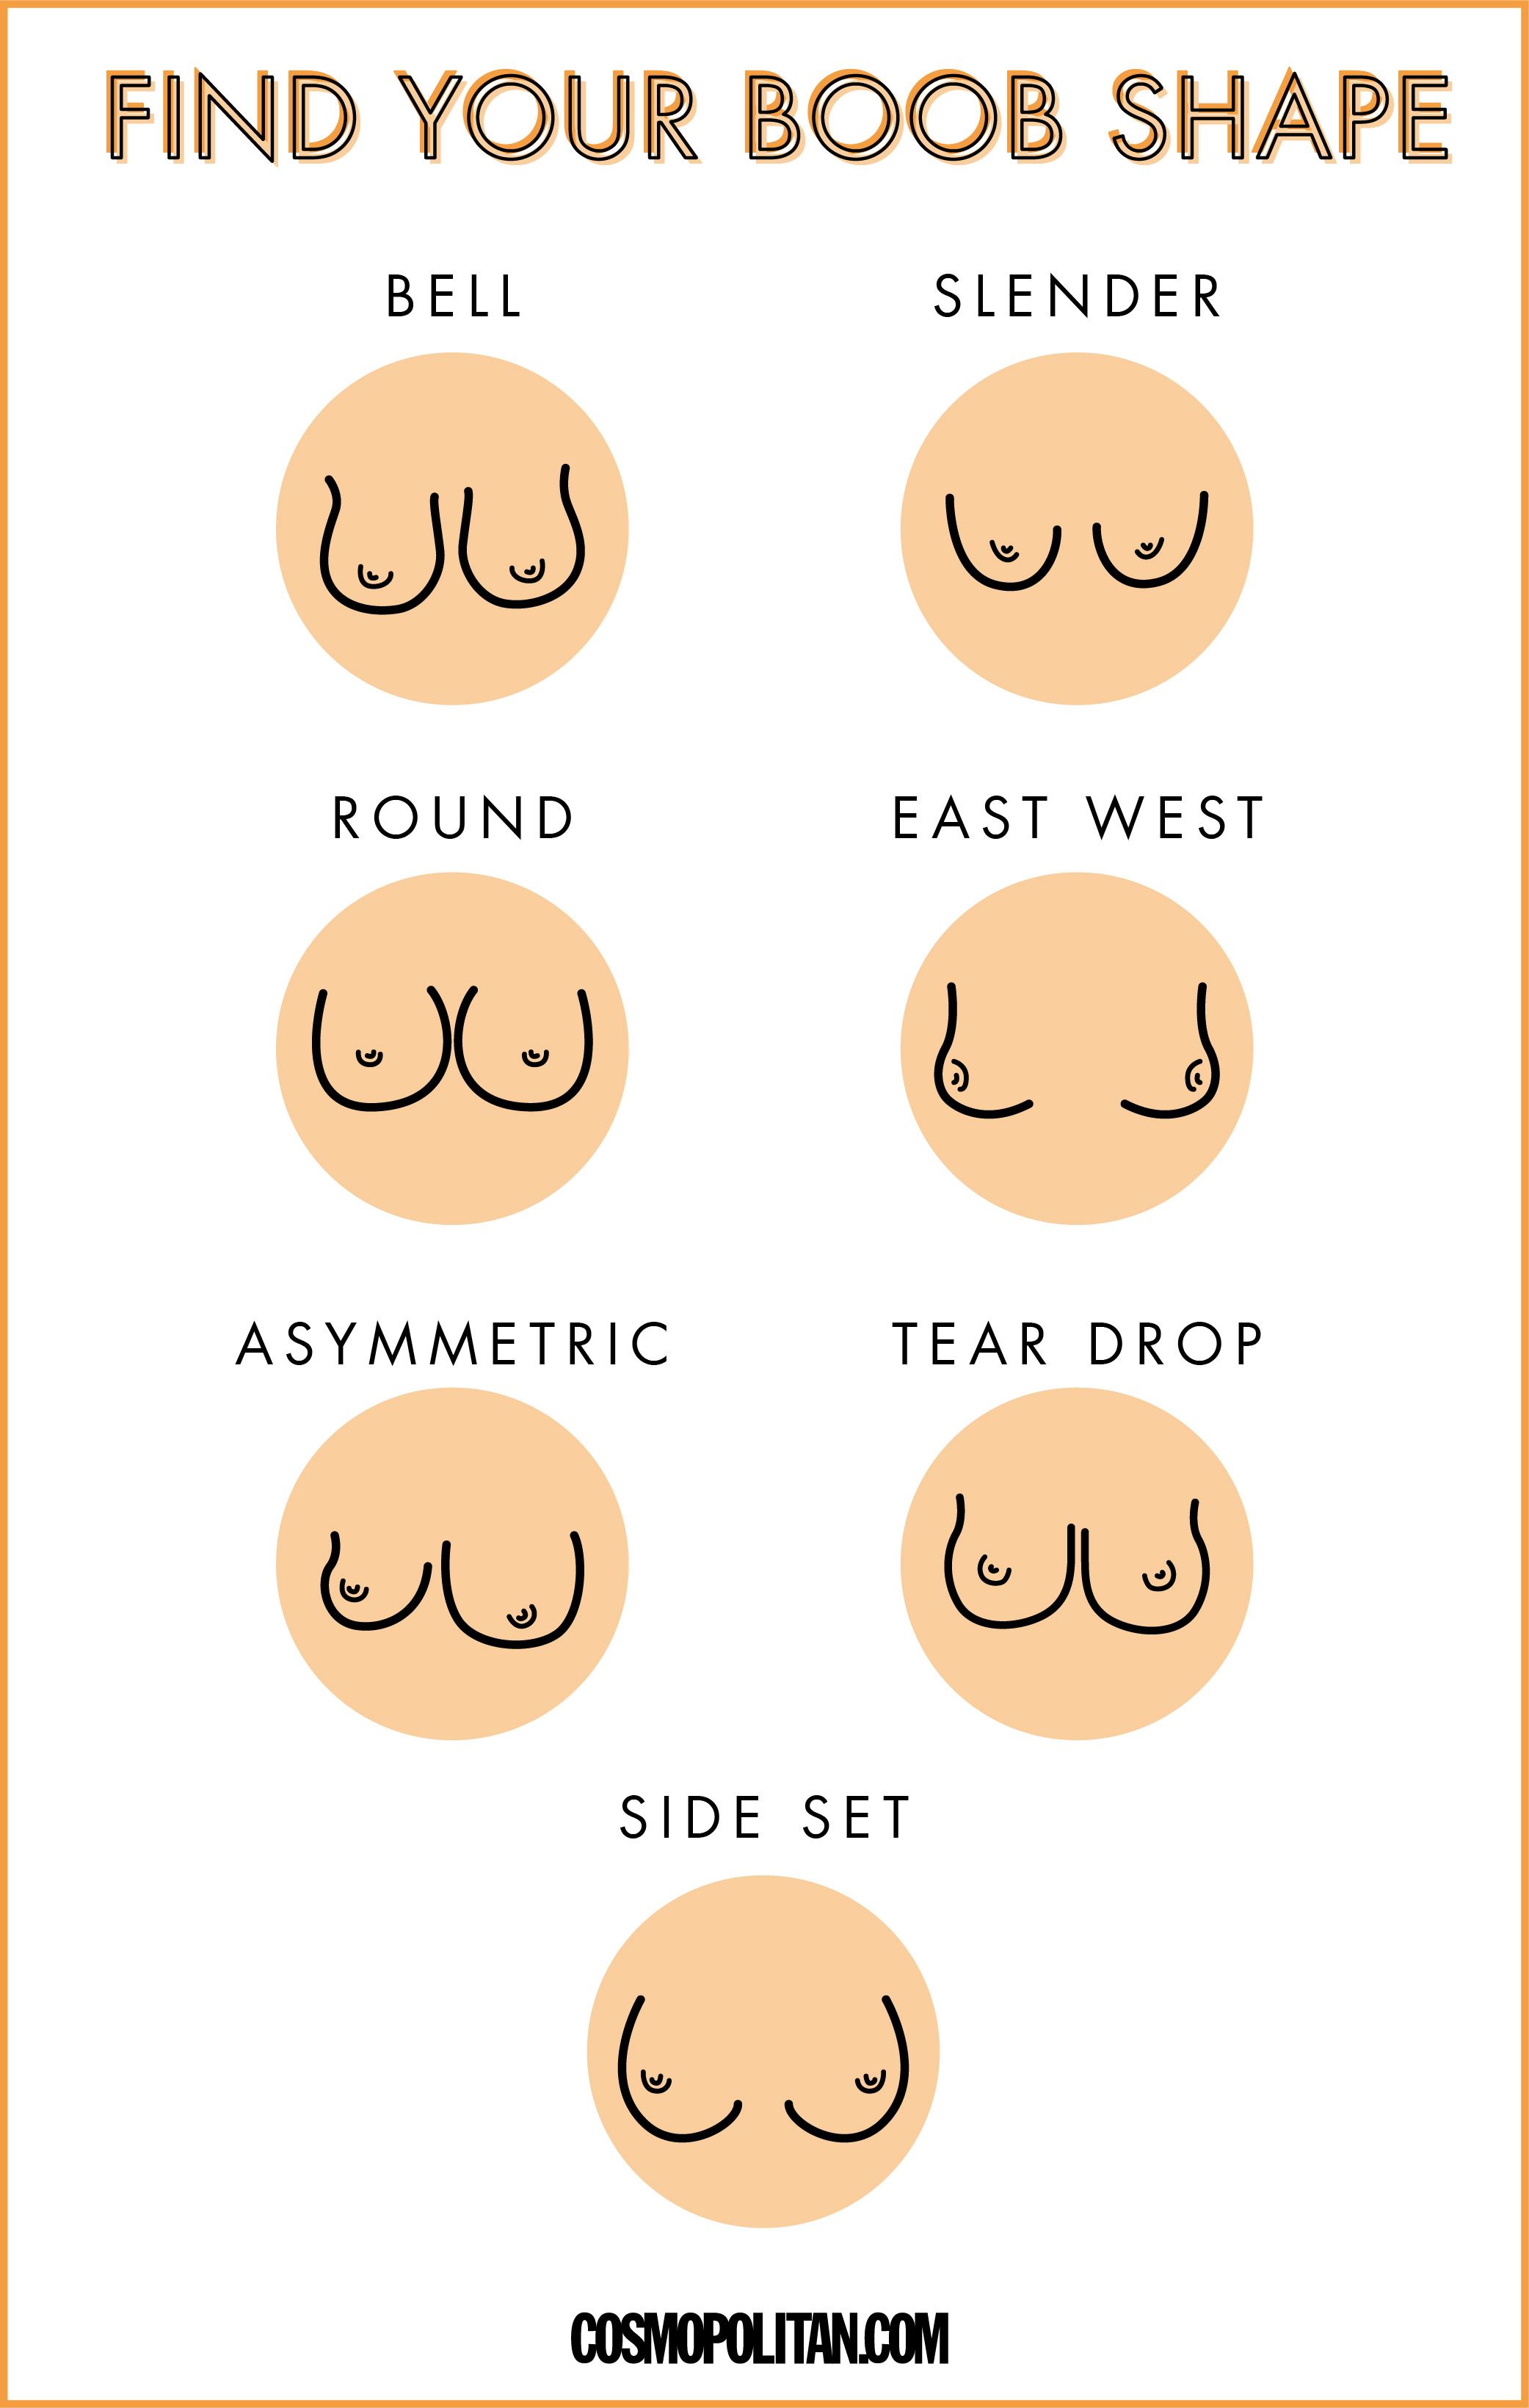 виды форм груди женщин фото 118